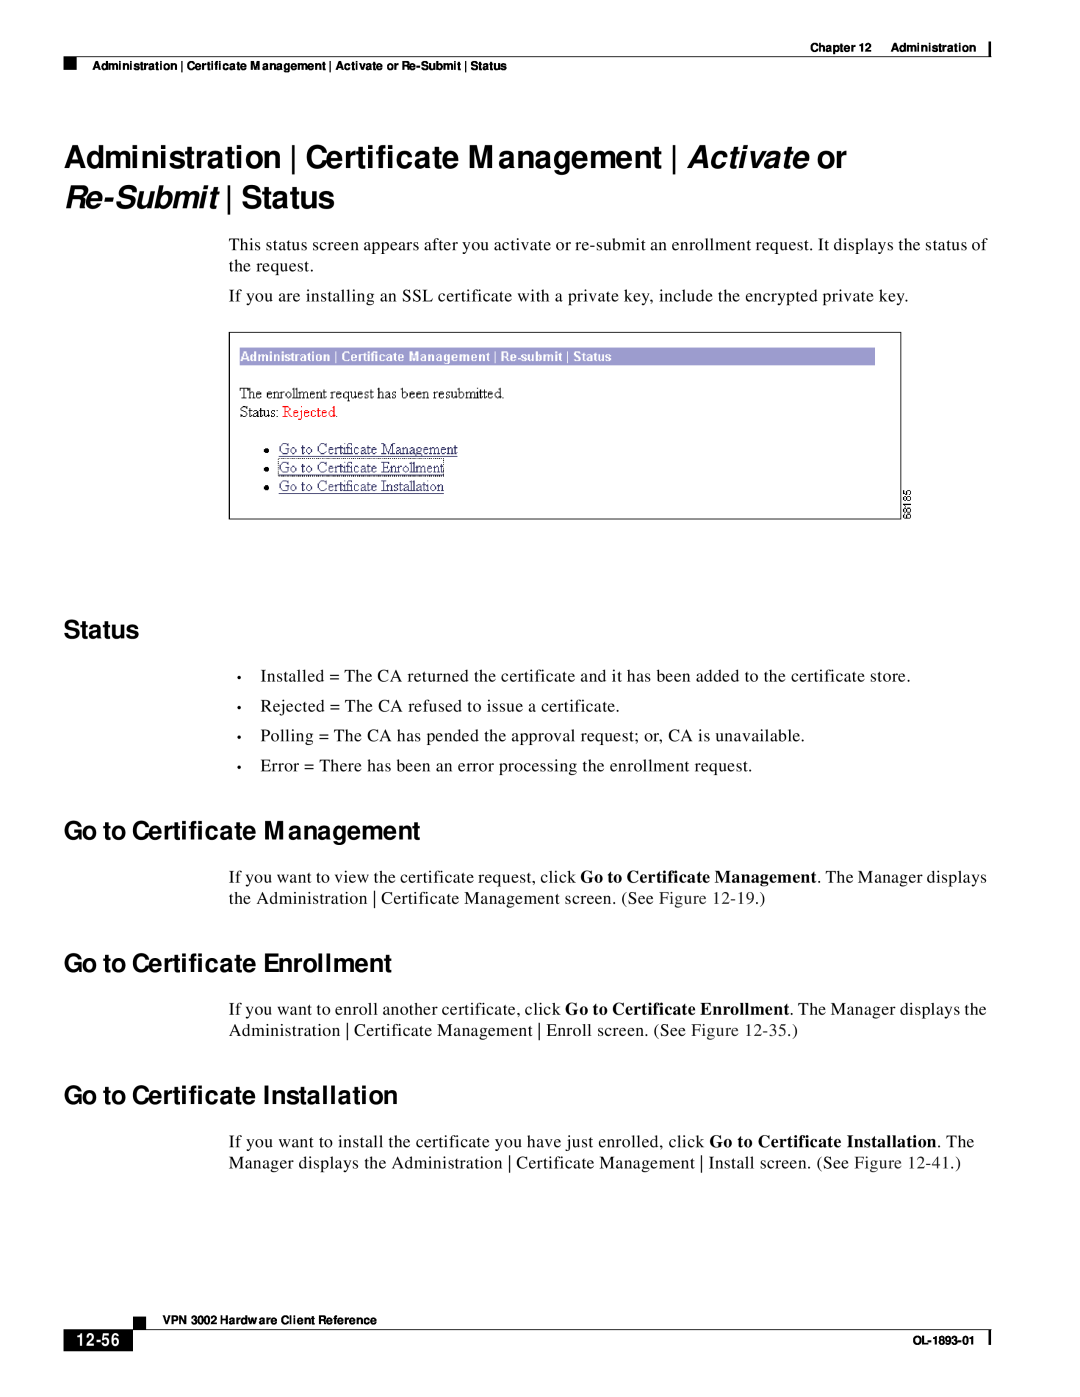 Cisco Systems VPN 3002 manual 12-56, Status, Go to Certificate Management, Go to Certificate Enrollment 